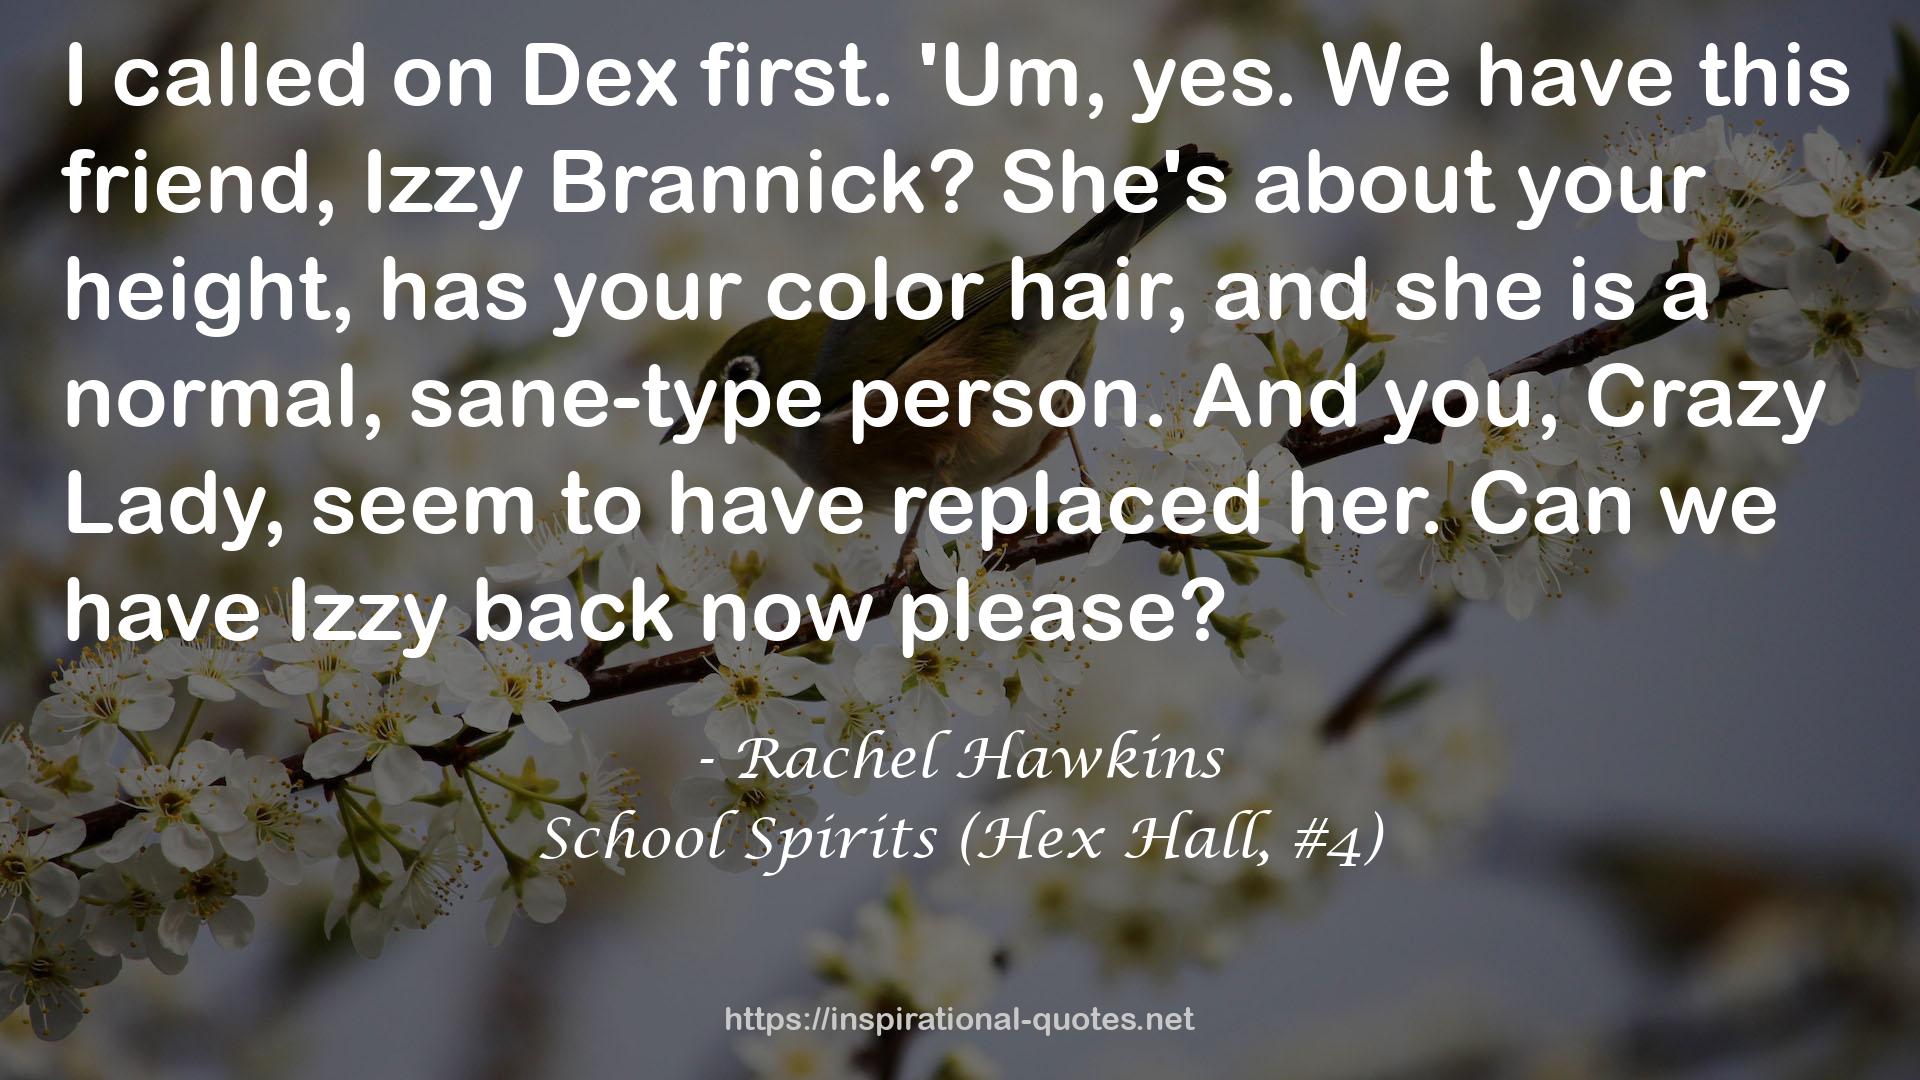 School Spirits (Hex Hall, #4) QUOTES